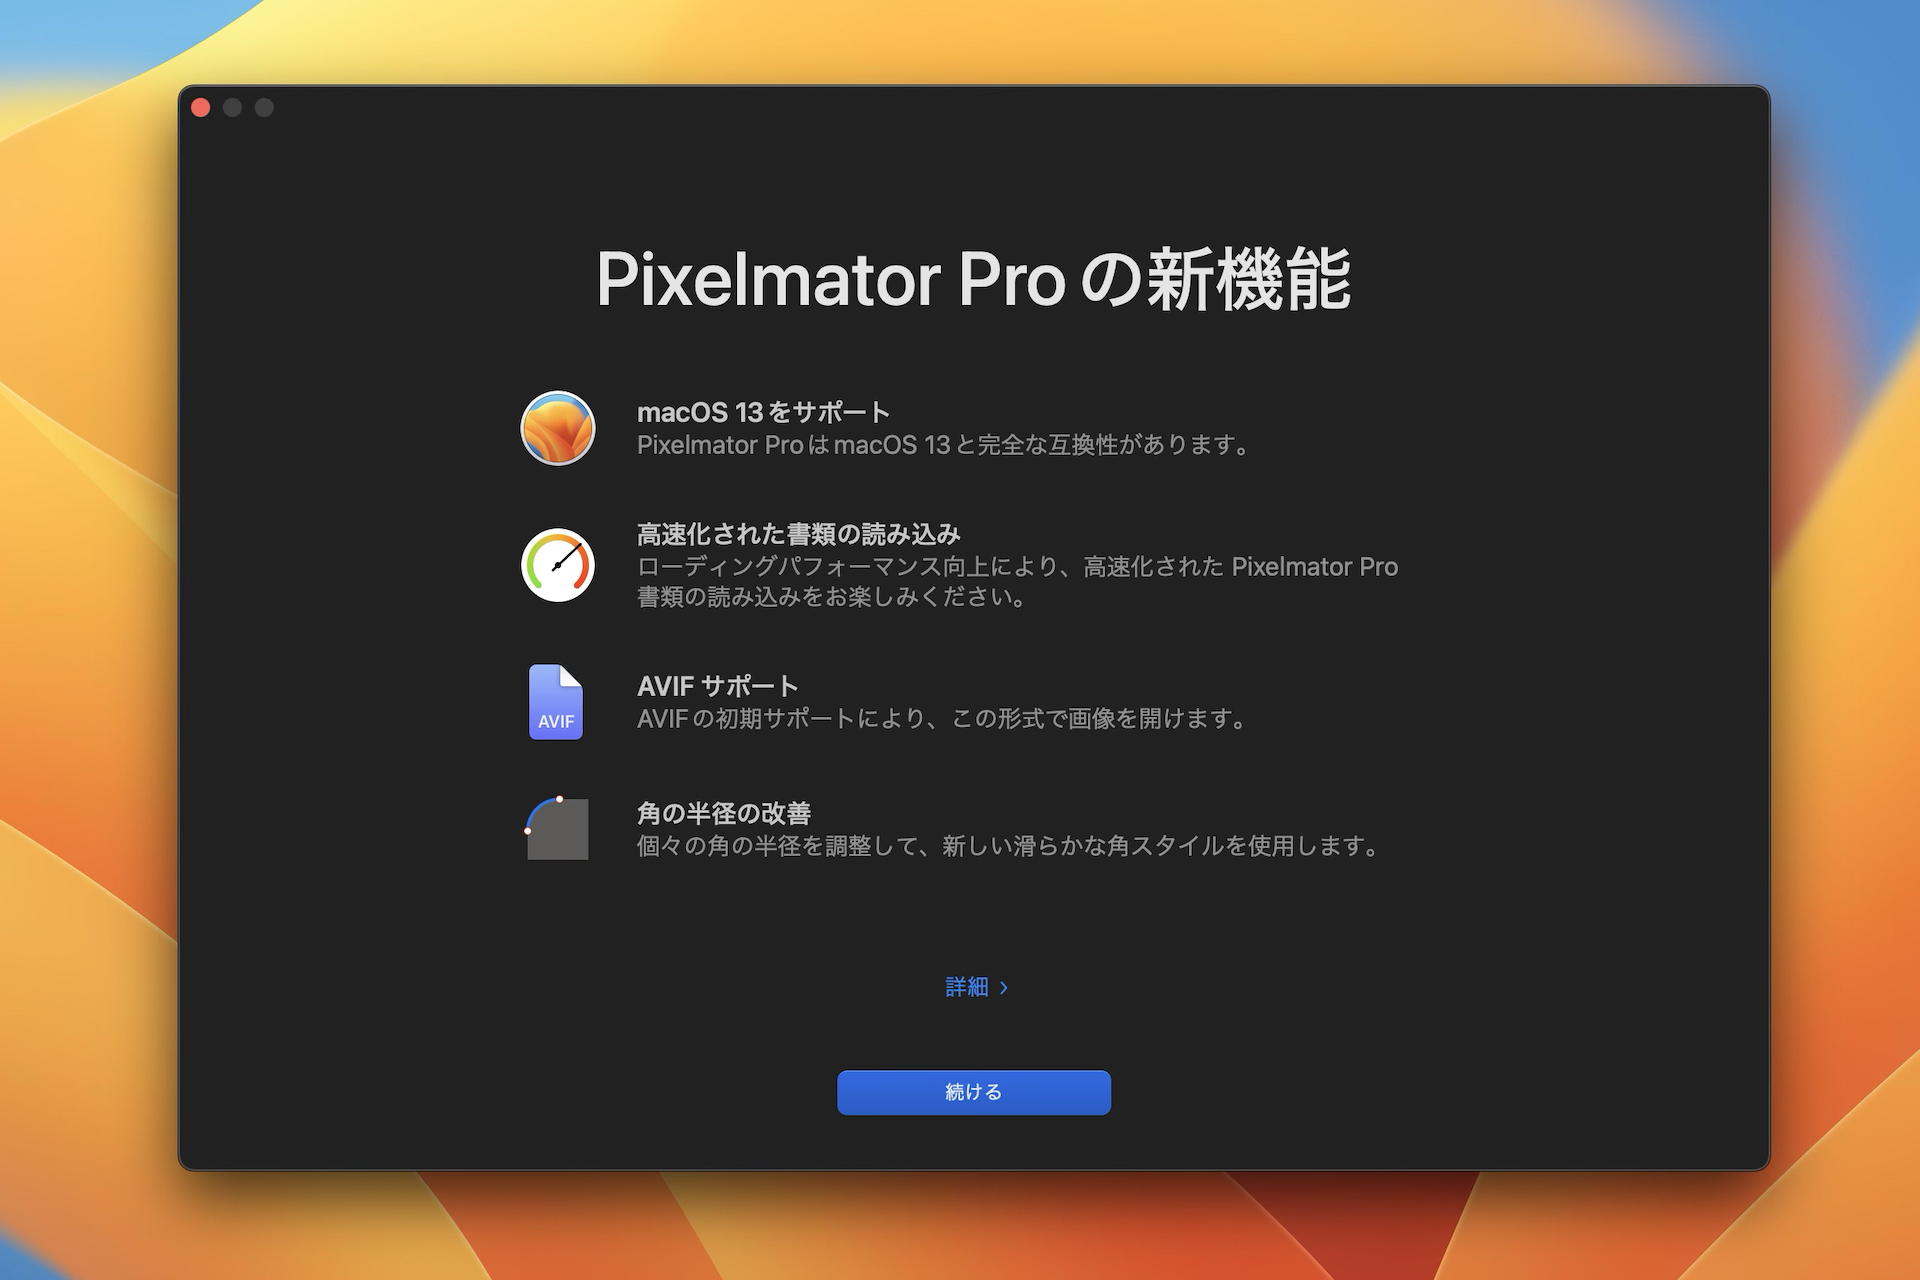 Pixelmator Pro v3.1の新機能